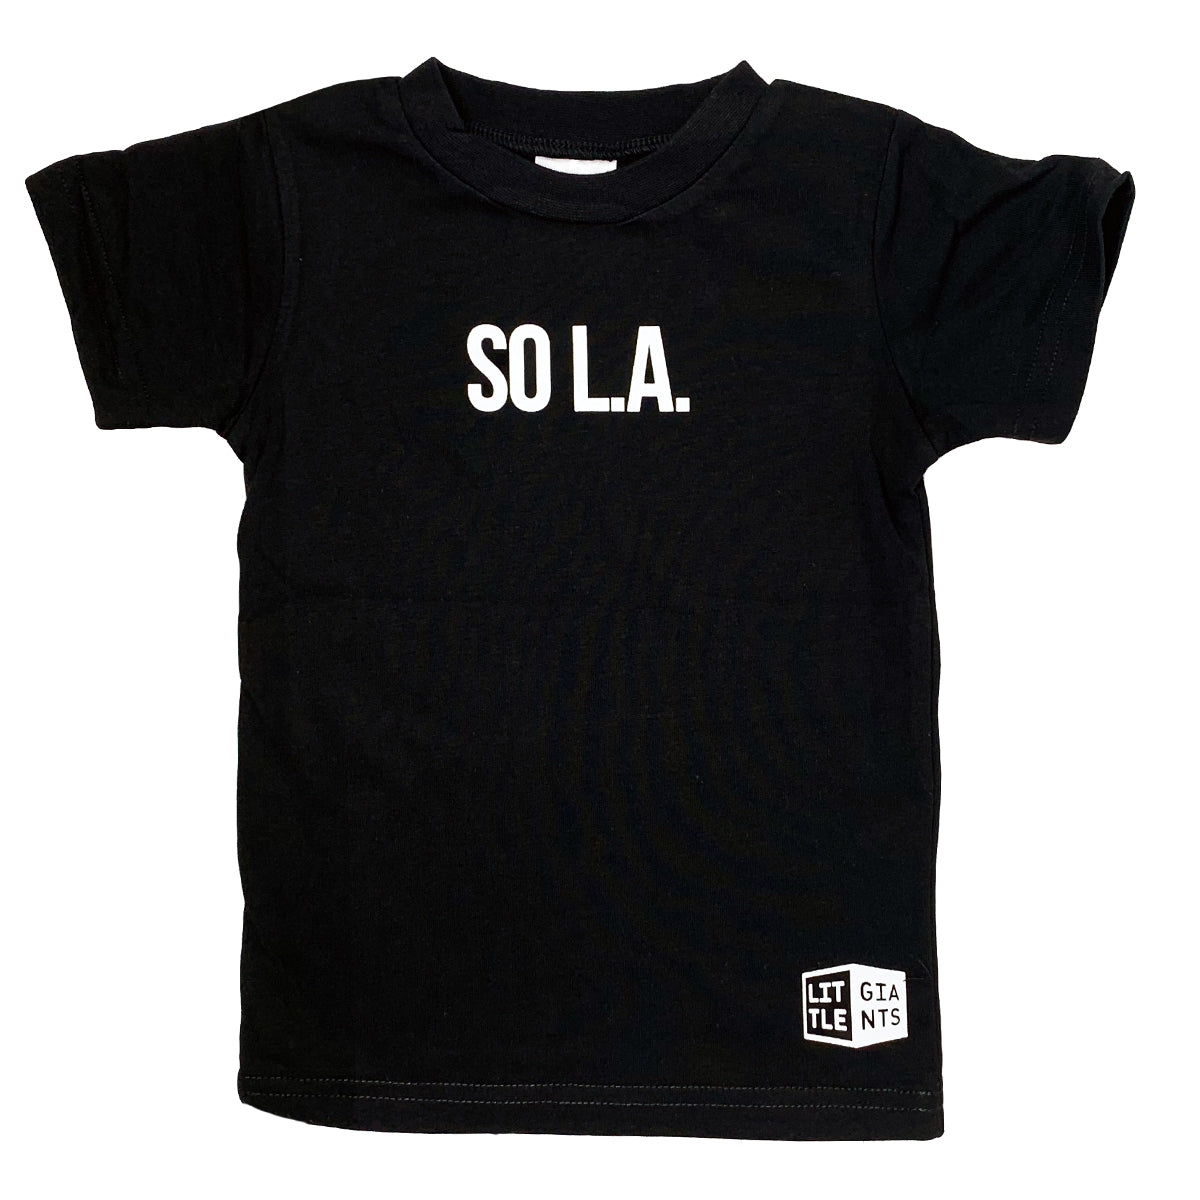 So L.A. T-Shirt (Black)